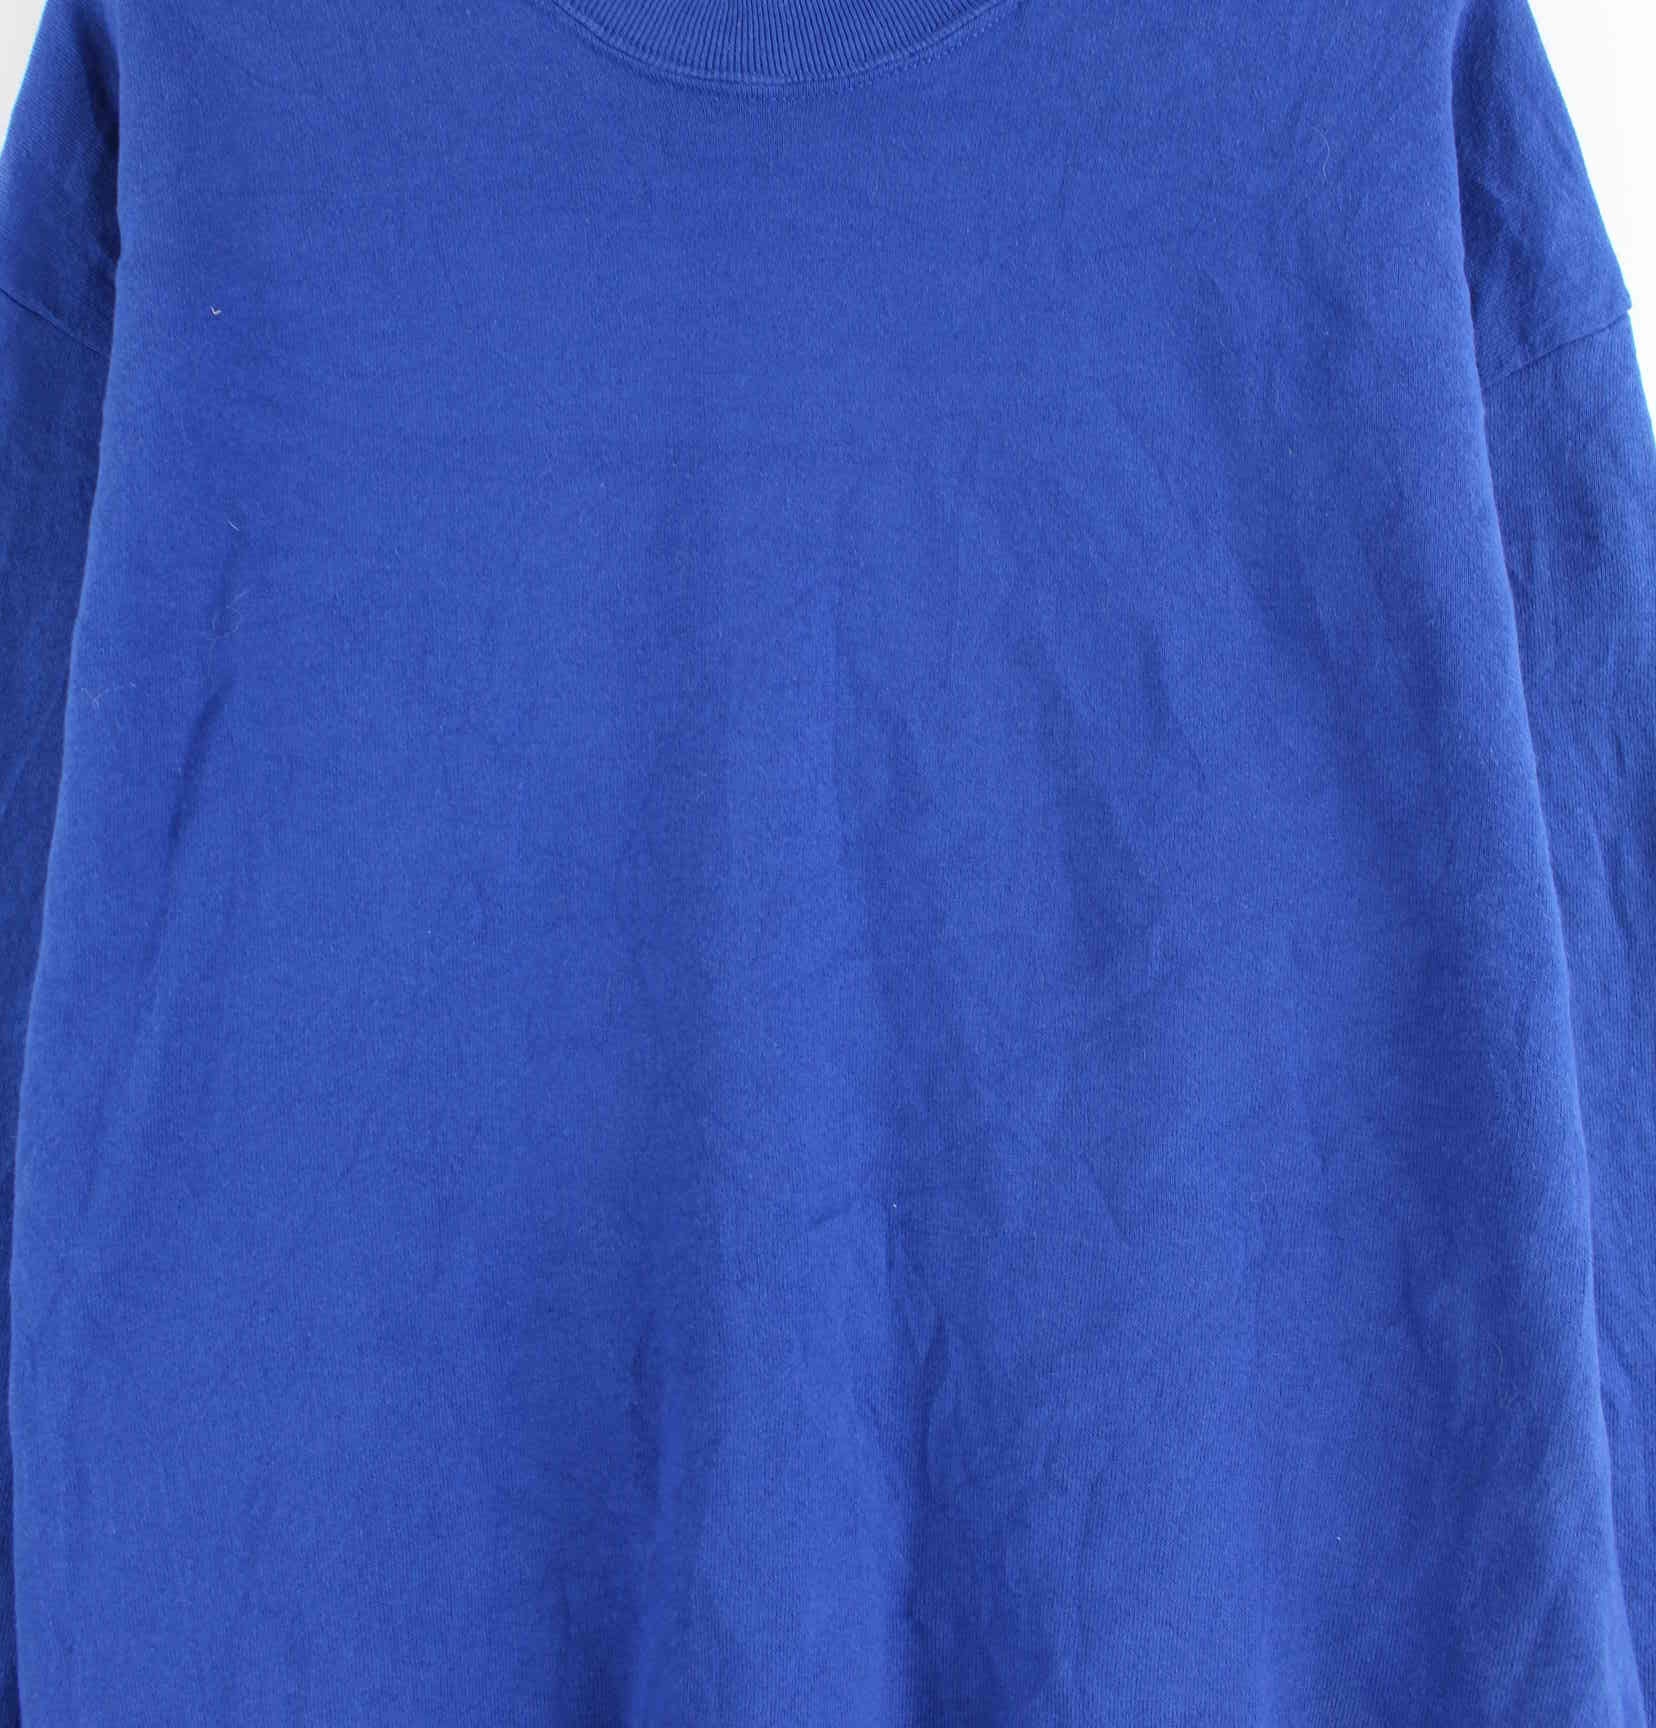 Jerzees 90s Vintage Basic Sweater Blau XL (detail image 1)